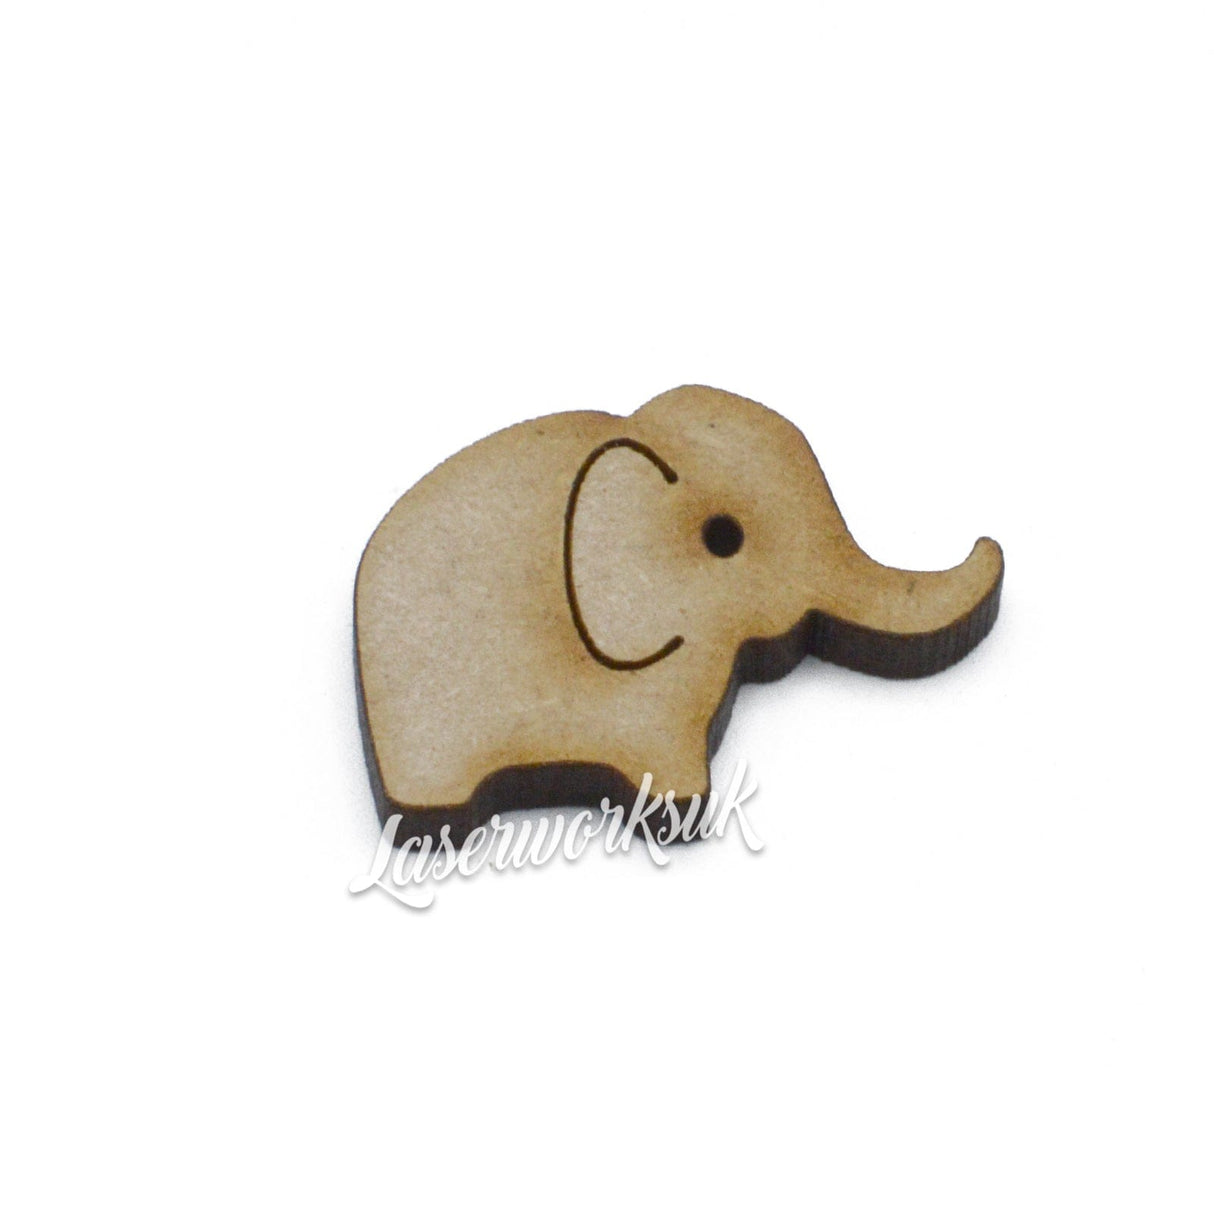 15x Wooden Craft Elephant Shapes - Laserworksuk